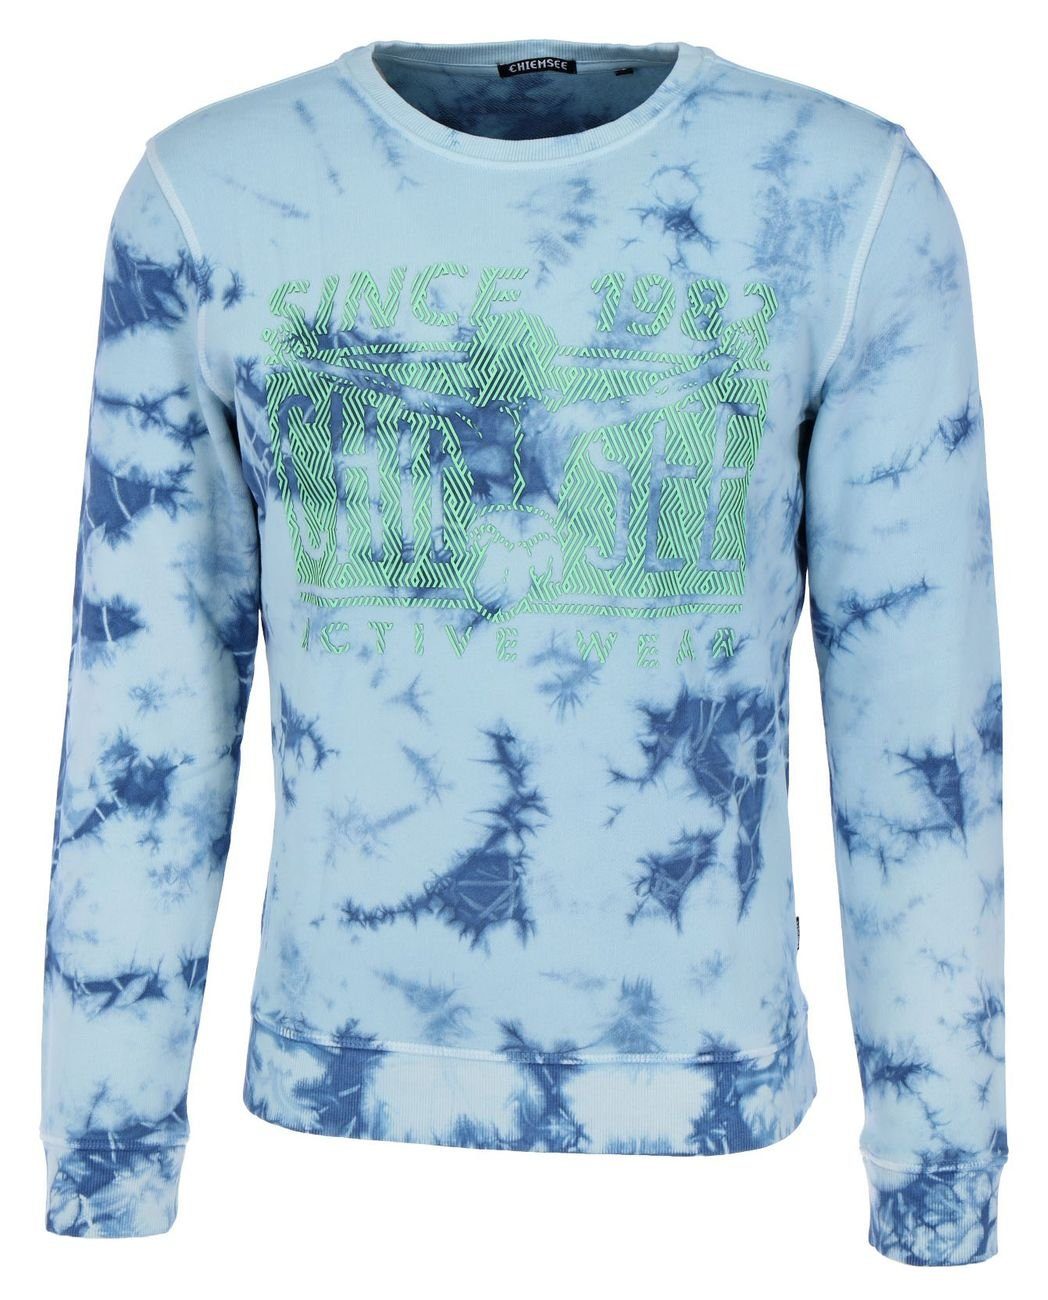 Chiemsee Sweatshirt Men Sweatshirt, Regular Fit M Blue/D Blue BTK